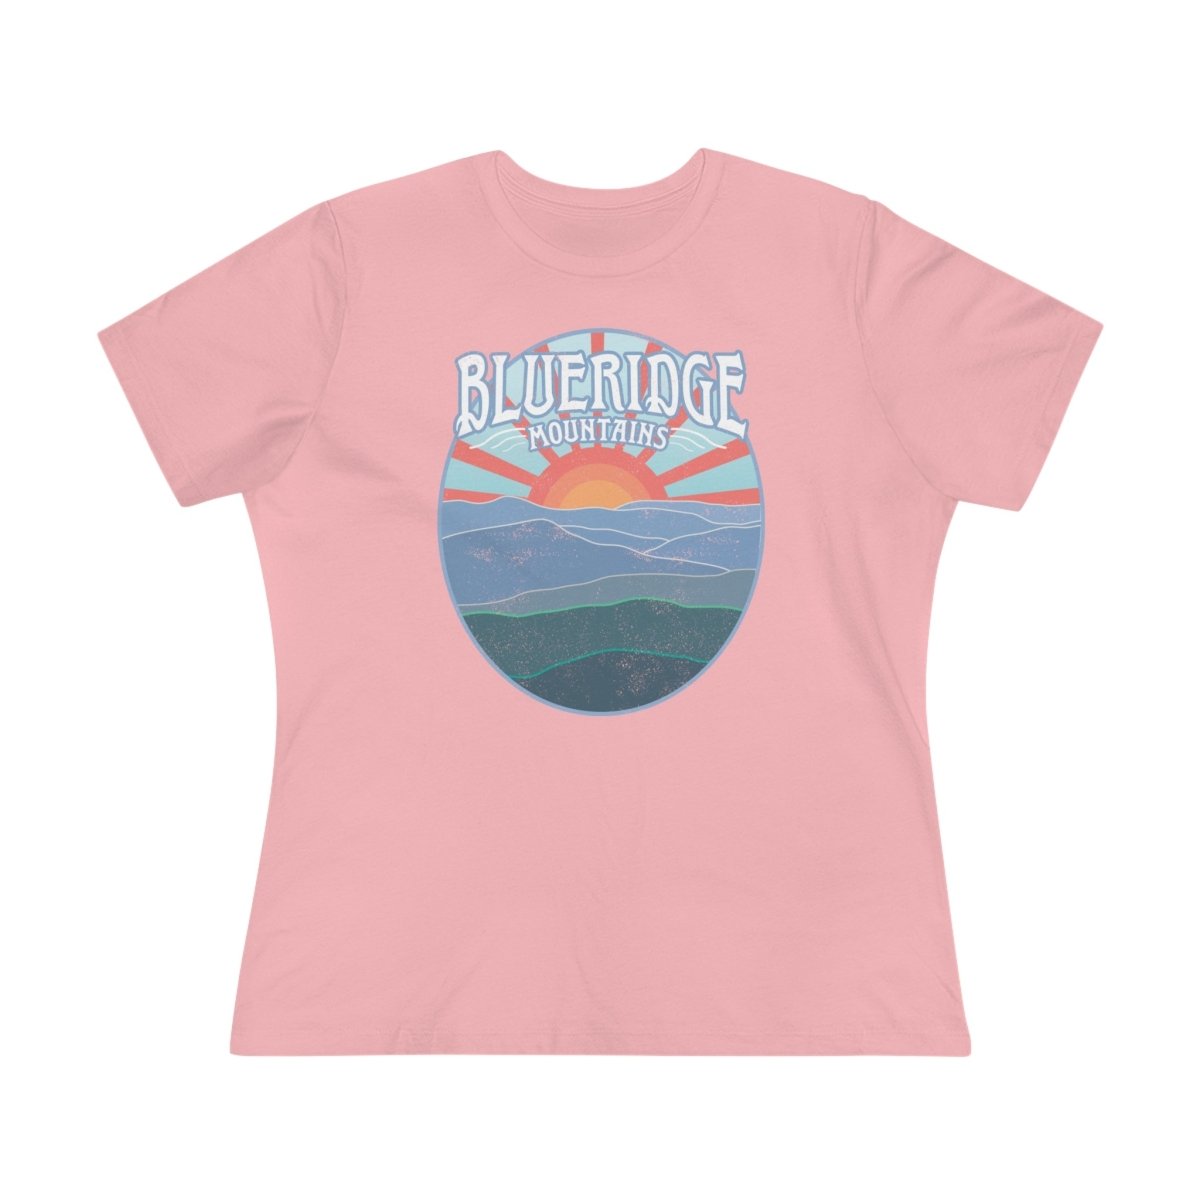 Blue Ridge Women's Premium Relaxed Fit T-Shirt, East Coast, Mountains, Appalachian Trail. Outdoors, Nature